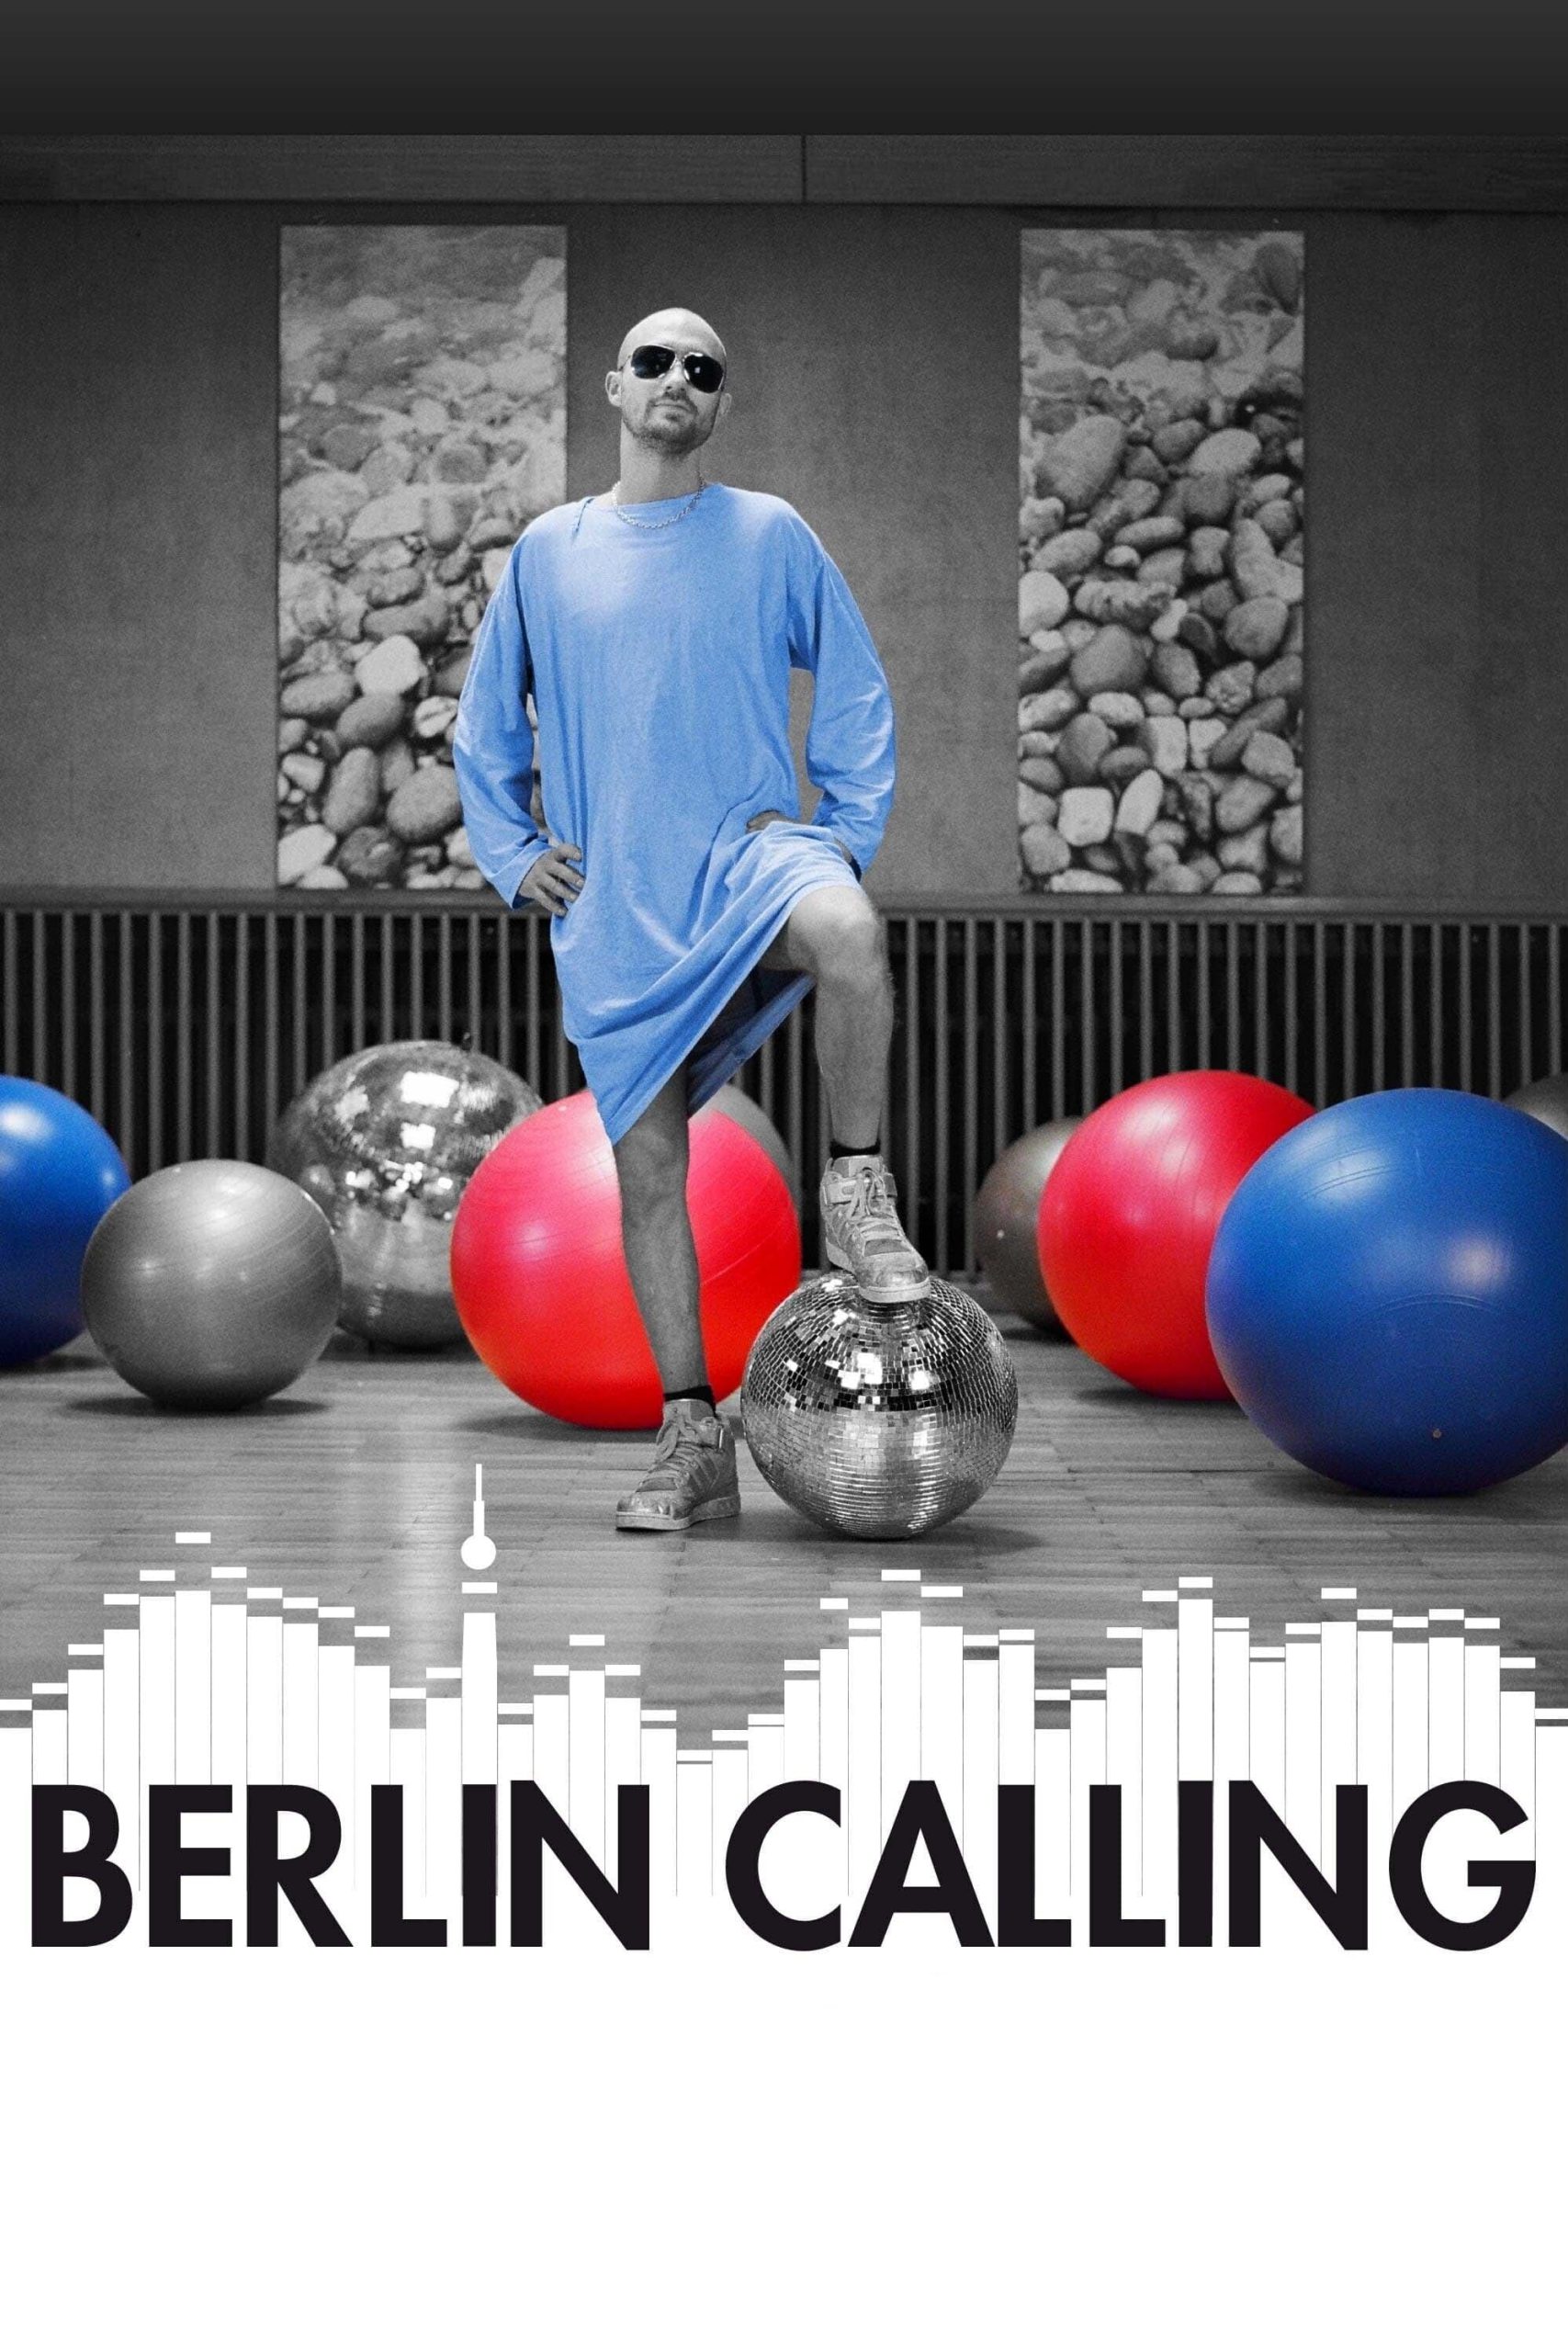 Berlin calling [HD] (2009)